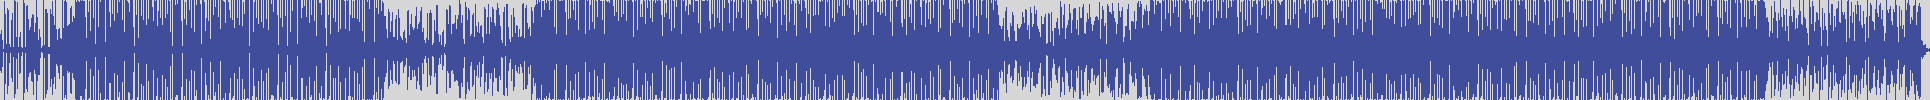 nf_boyz_records [NFY068] Broadway Corona - Even Astronaut [Yaka Kawasaky Mix] audio wave form